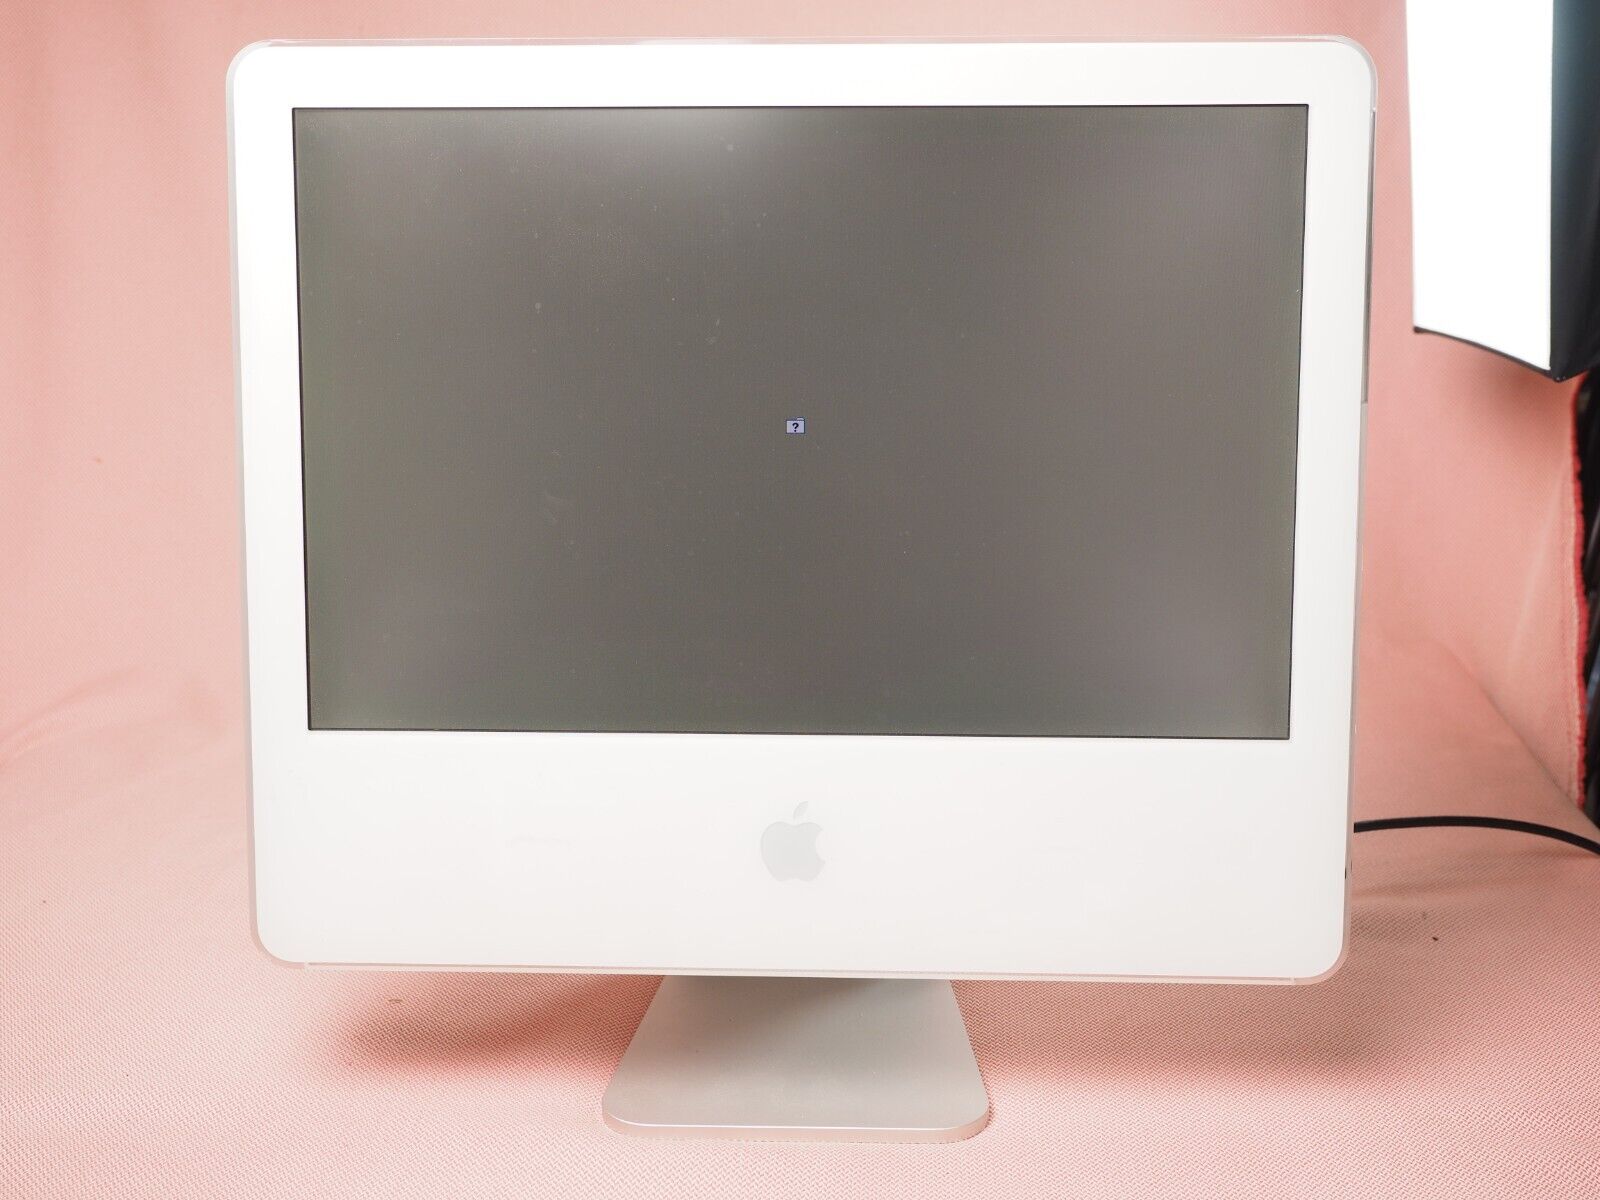 Apple iMac G5 20-inch December 2004 1.8GHz A1076 (M9250LL/A)